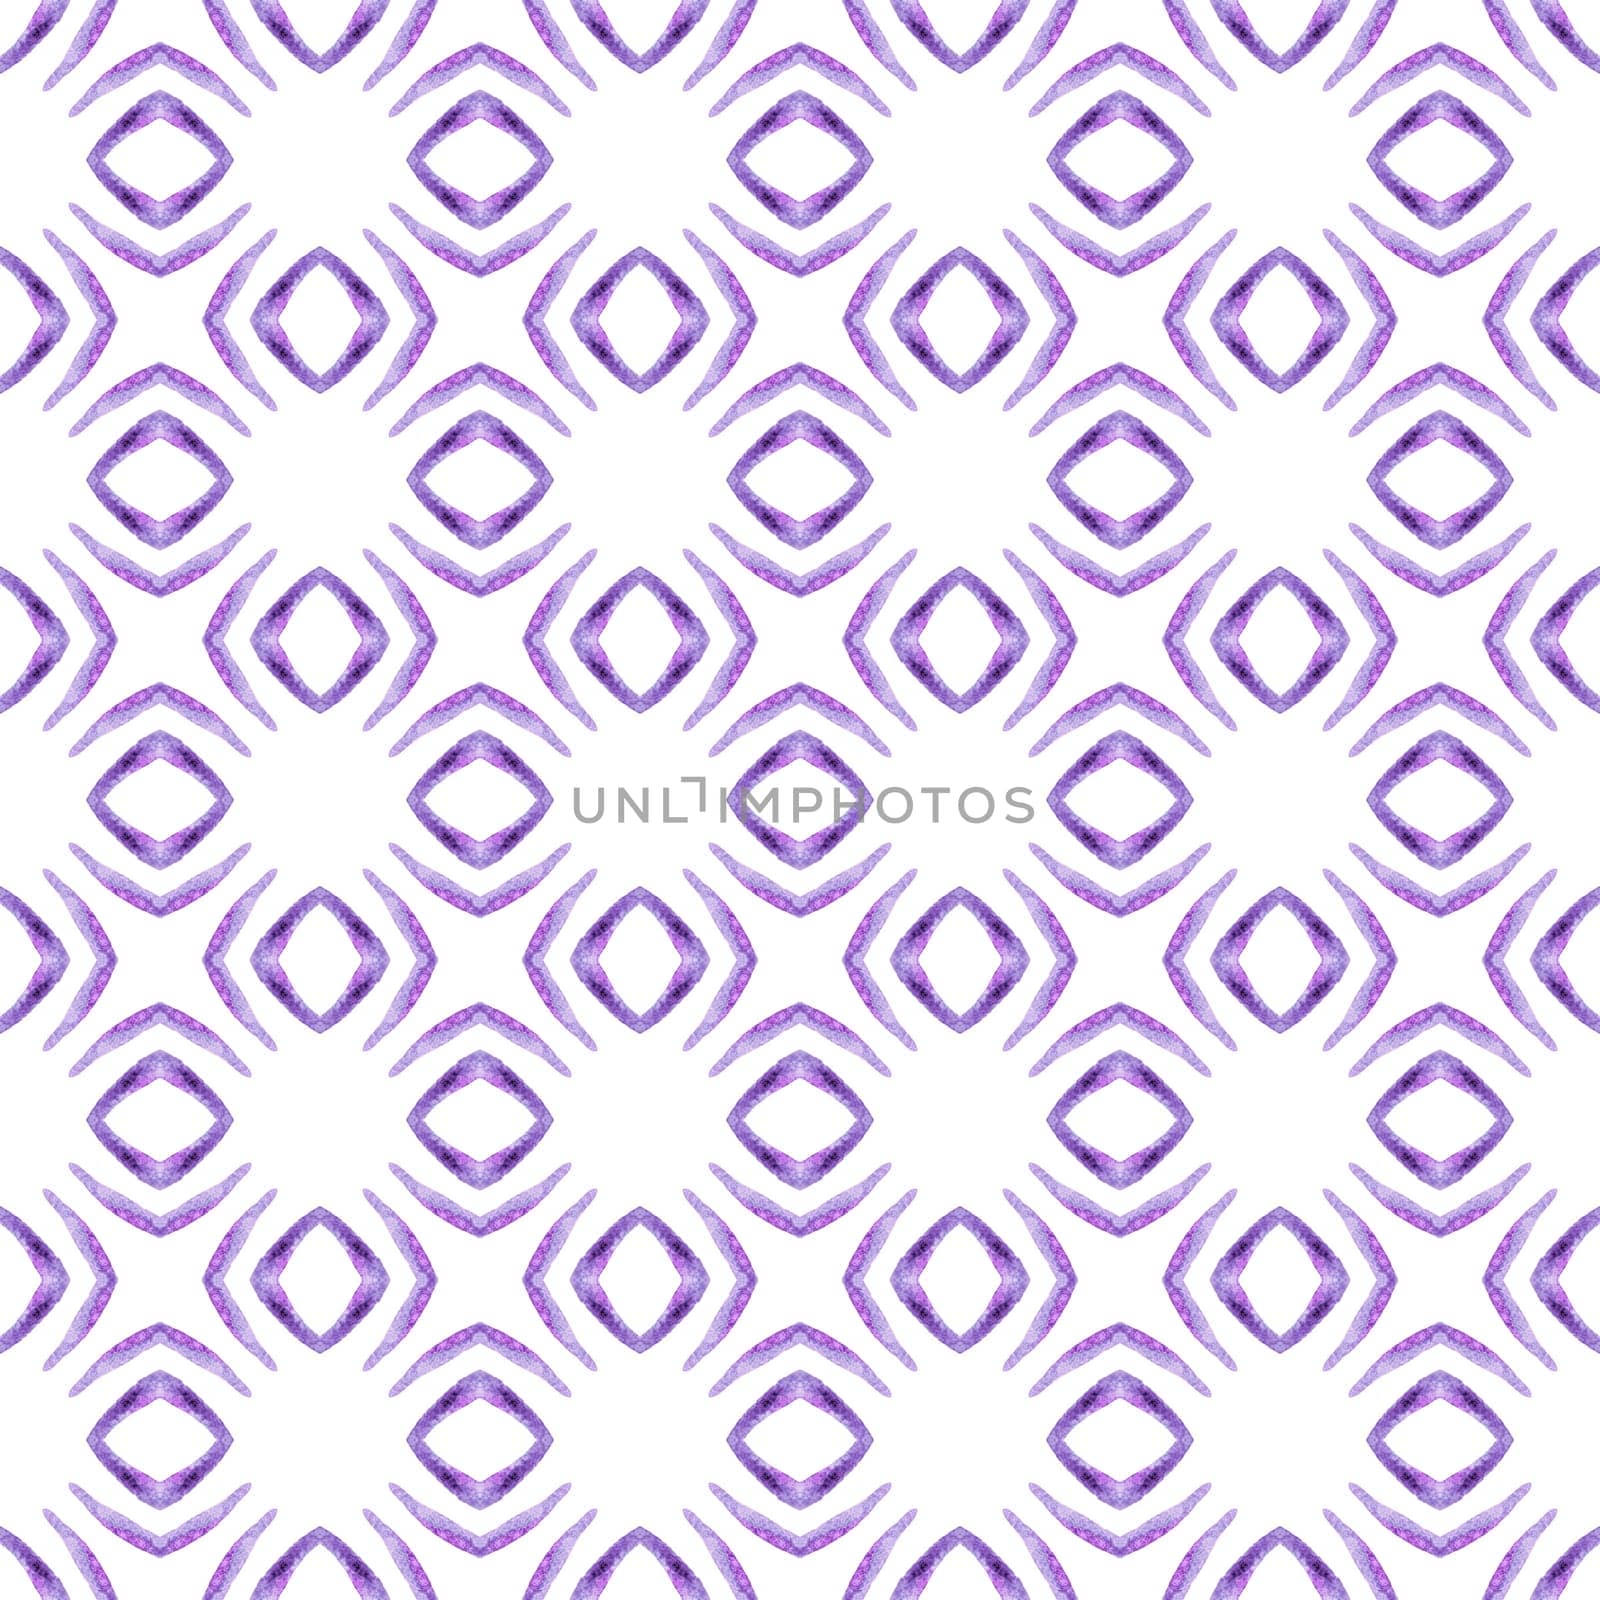 Textile ready splendid print, swimwear fabric, wallpaper, wrapping. Purple delightful boho chic summer design. Oriental arabesque hand drawn border. Arabesque hand drawn design.